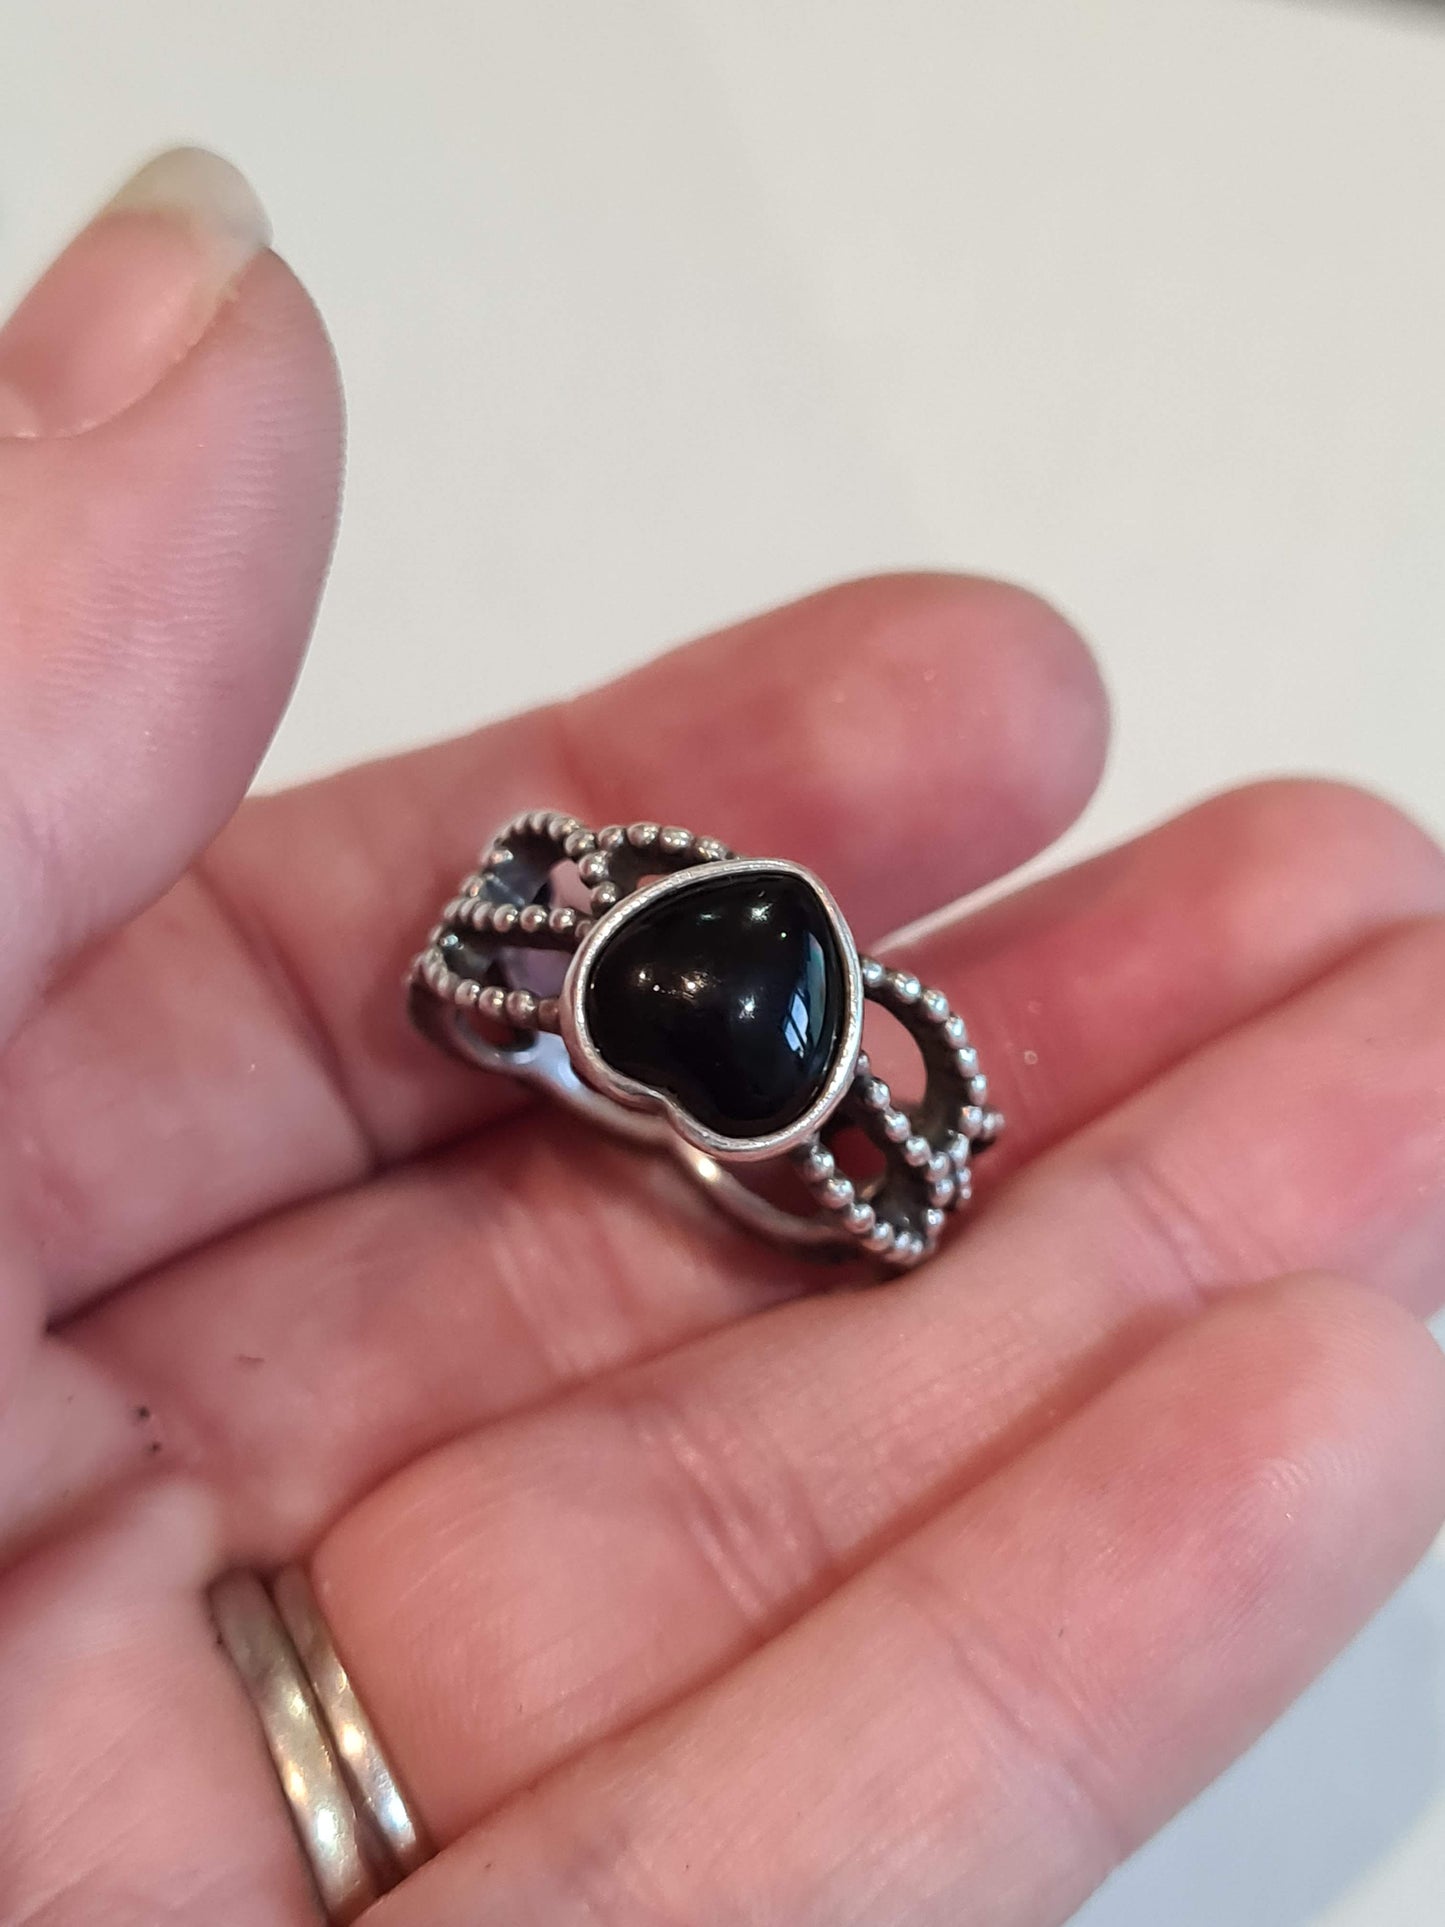 Genuine Pandora Black Stone Ring MI AMOR Heart Gothic Statement Size 60